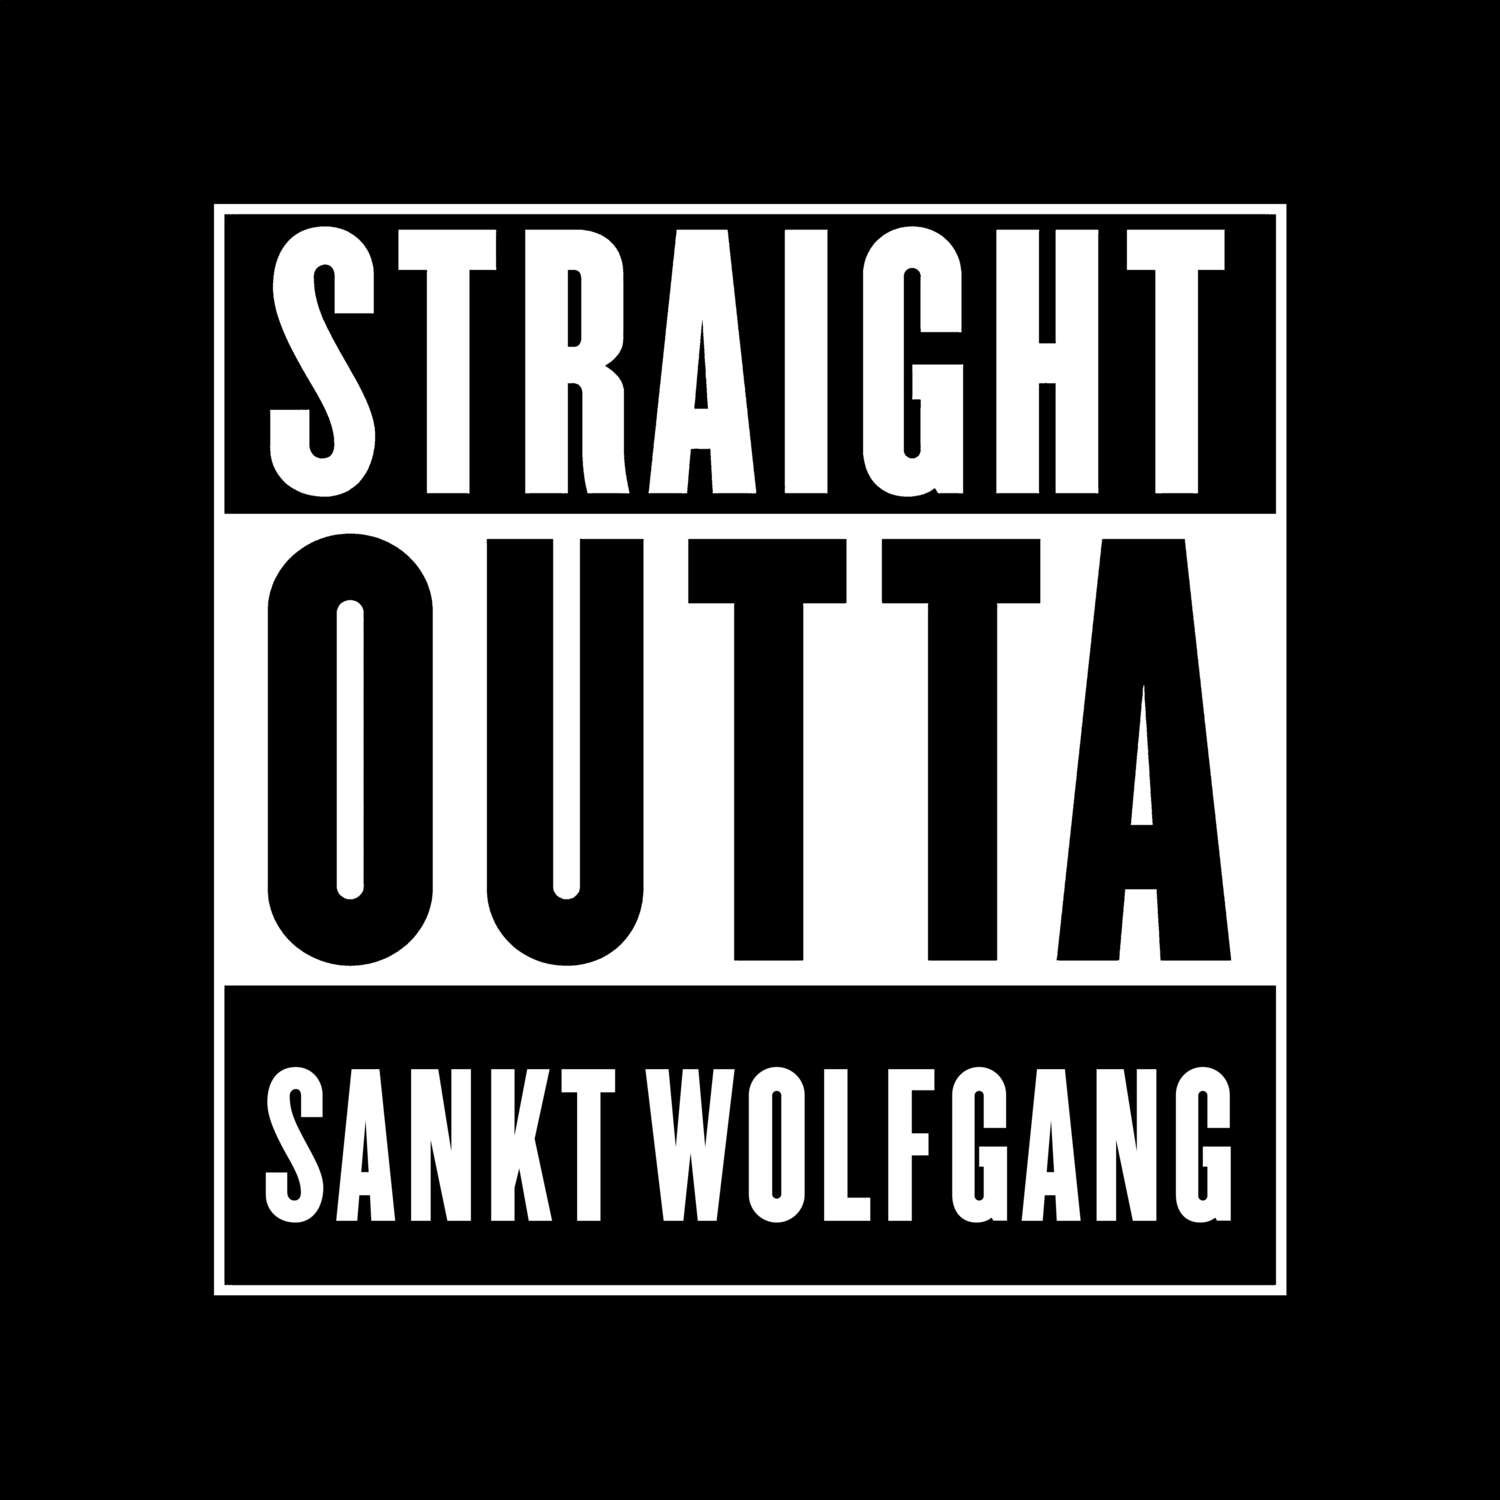 Sankt Wolfgang T-Shirt »Straight Outta«